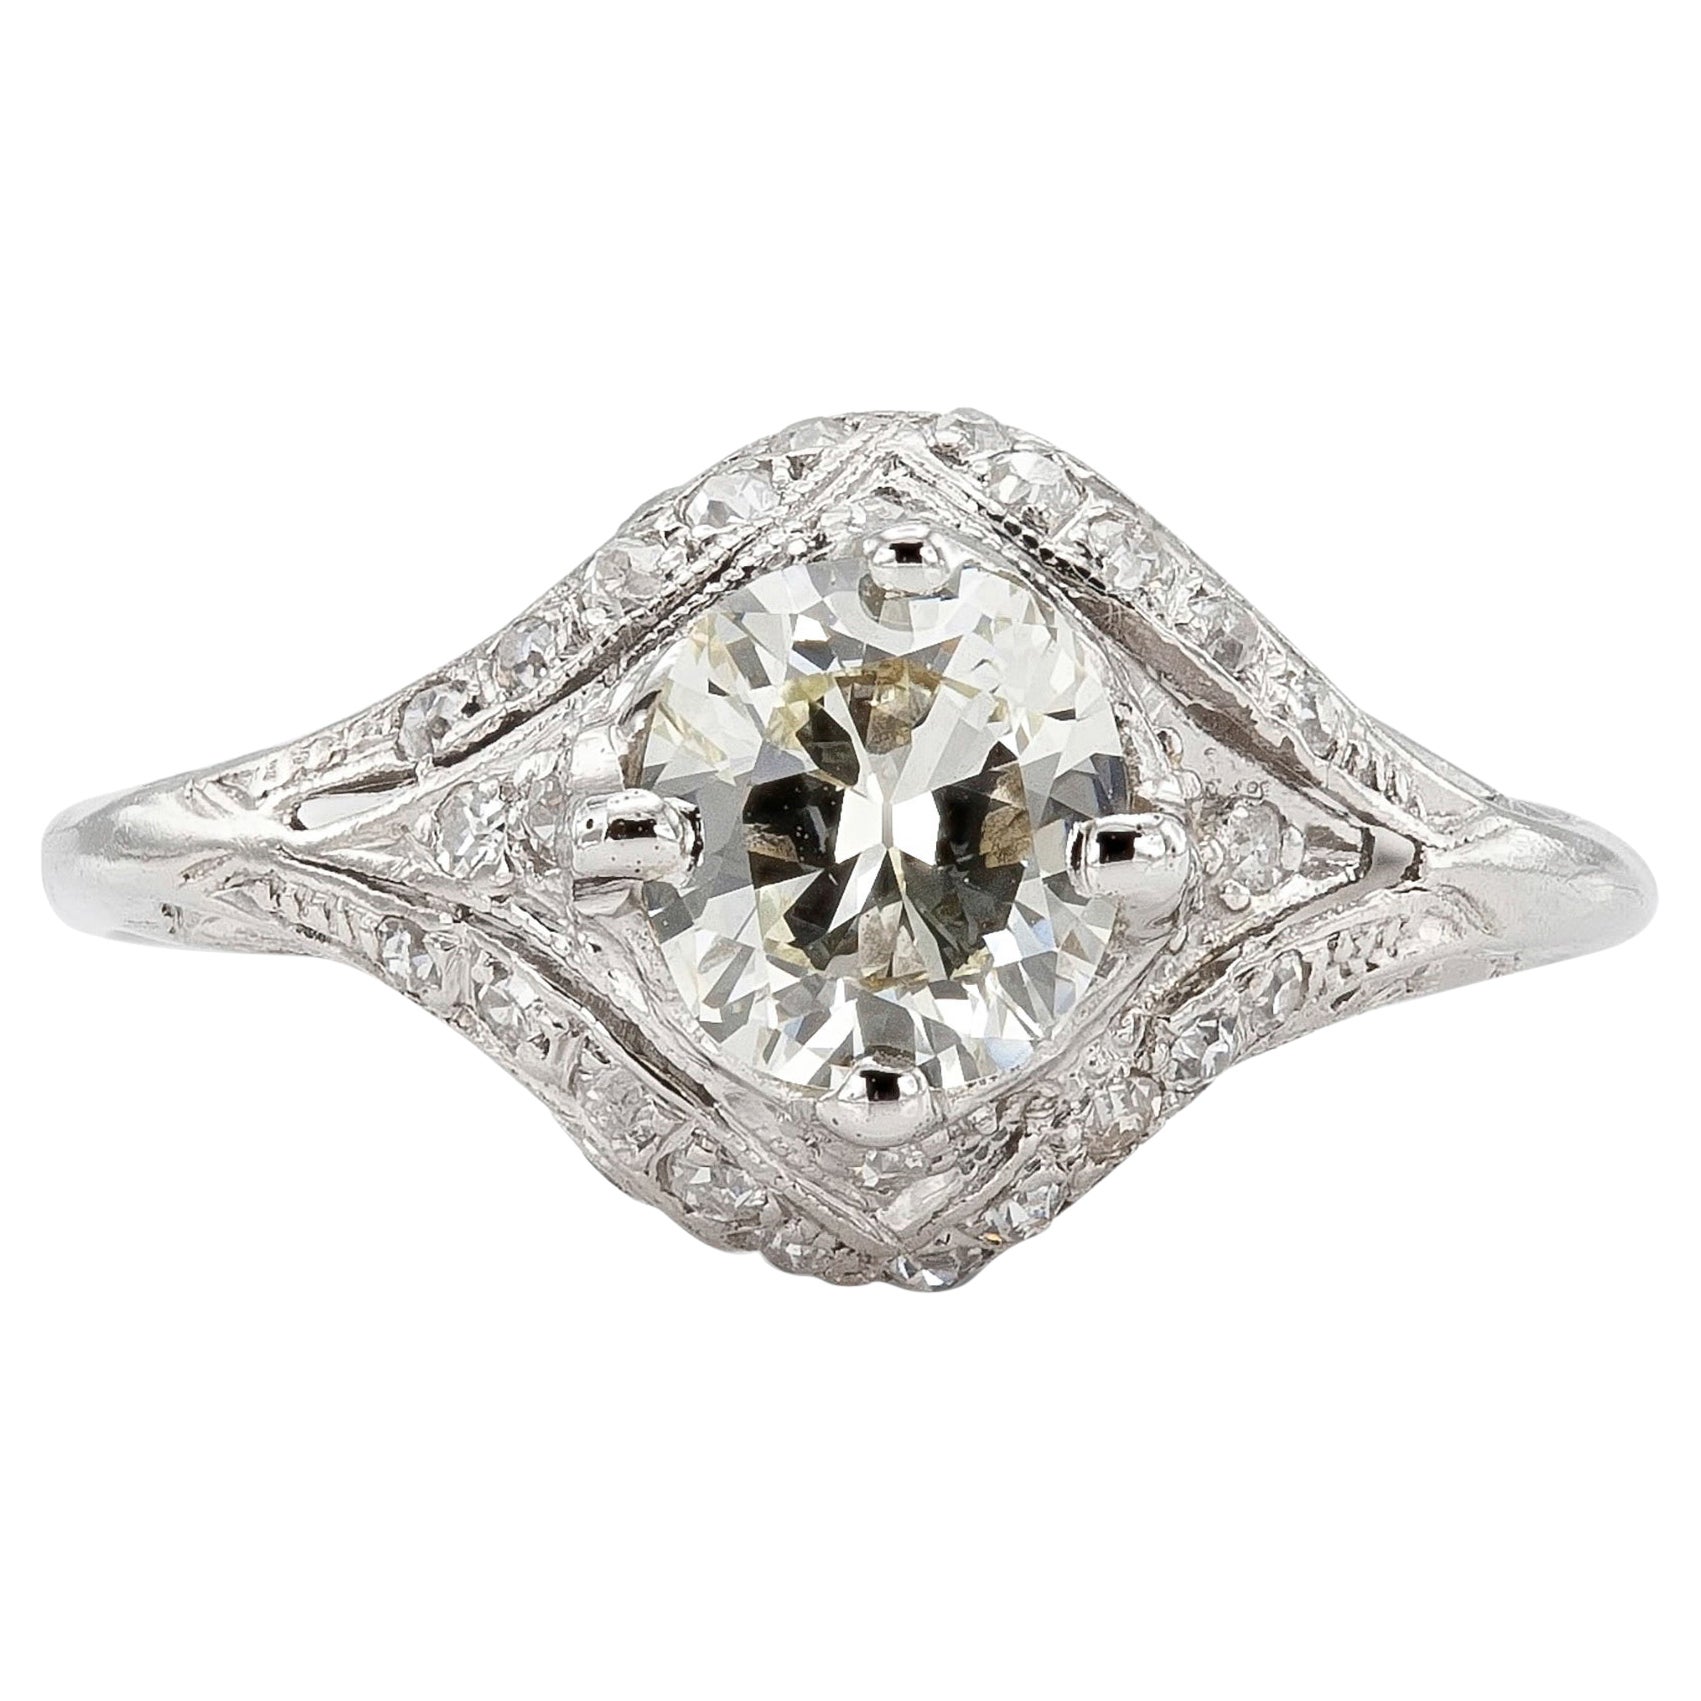 1.01 Carat Art Deco Diamond Engagement Ring